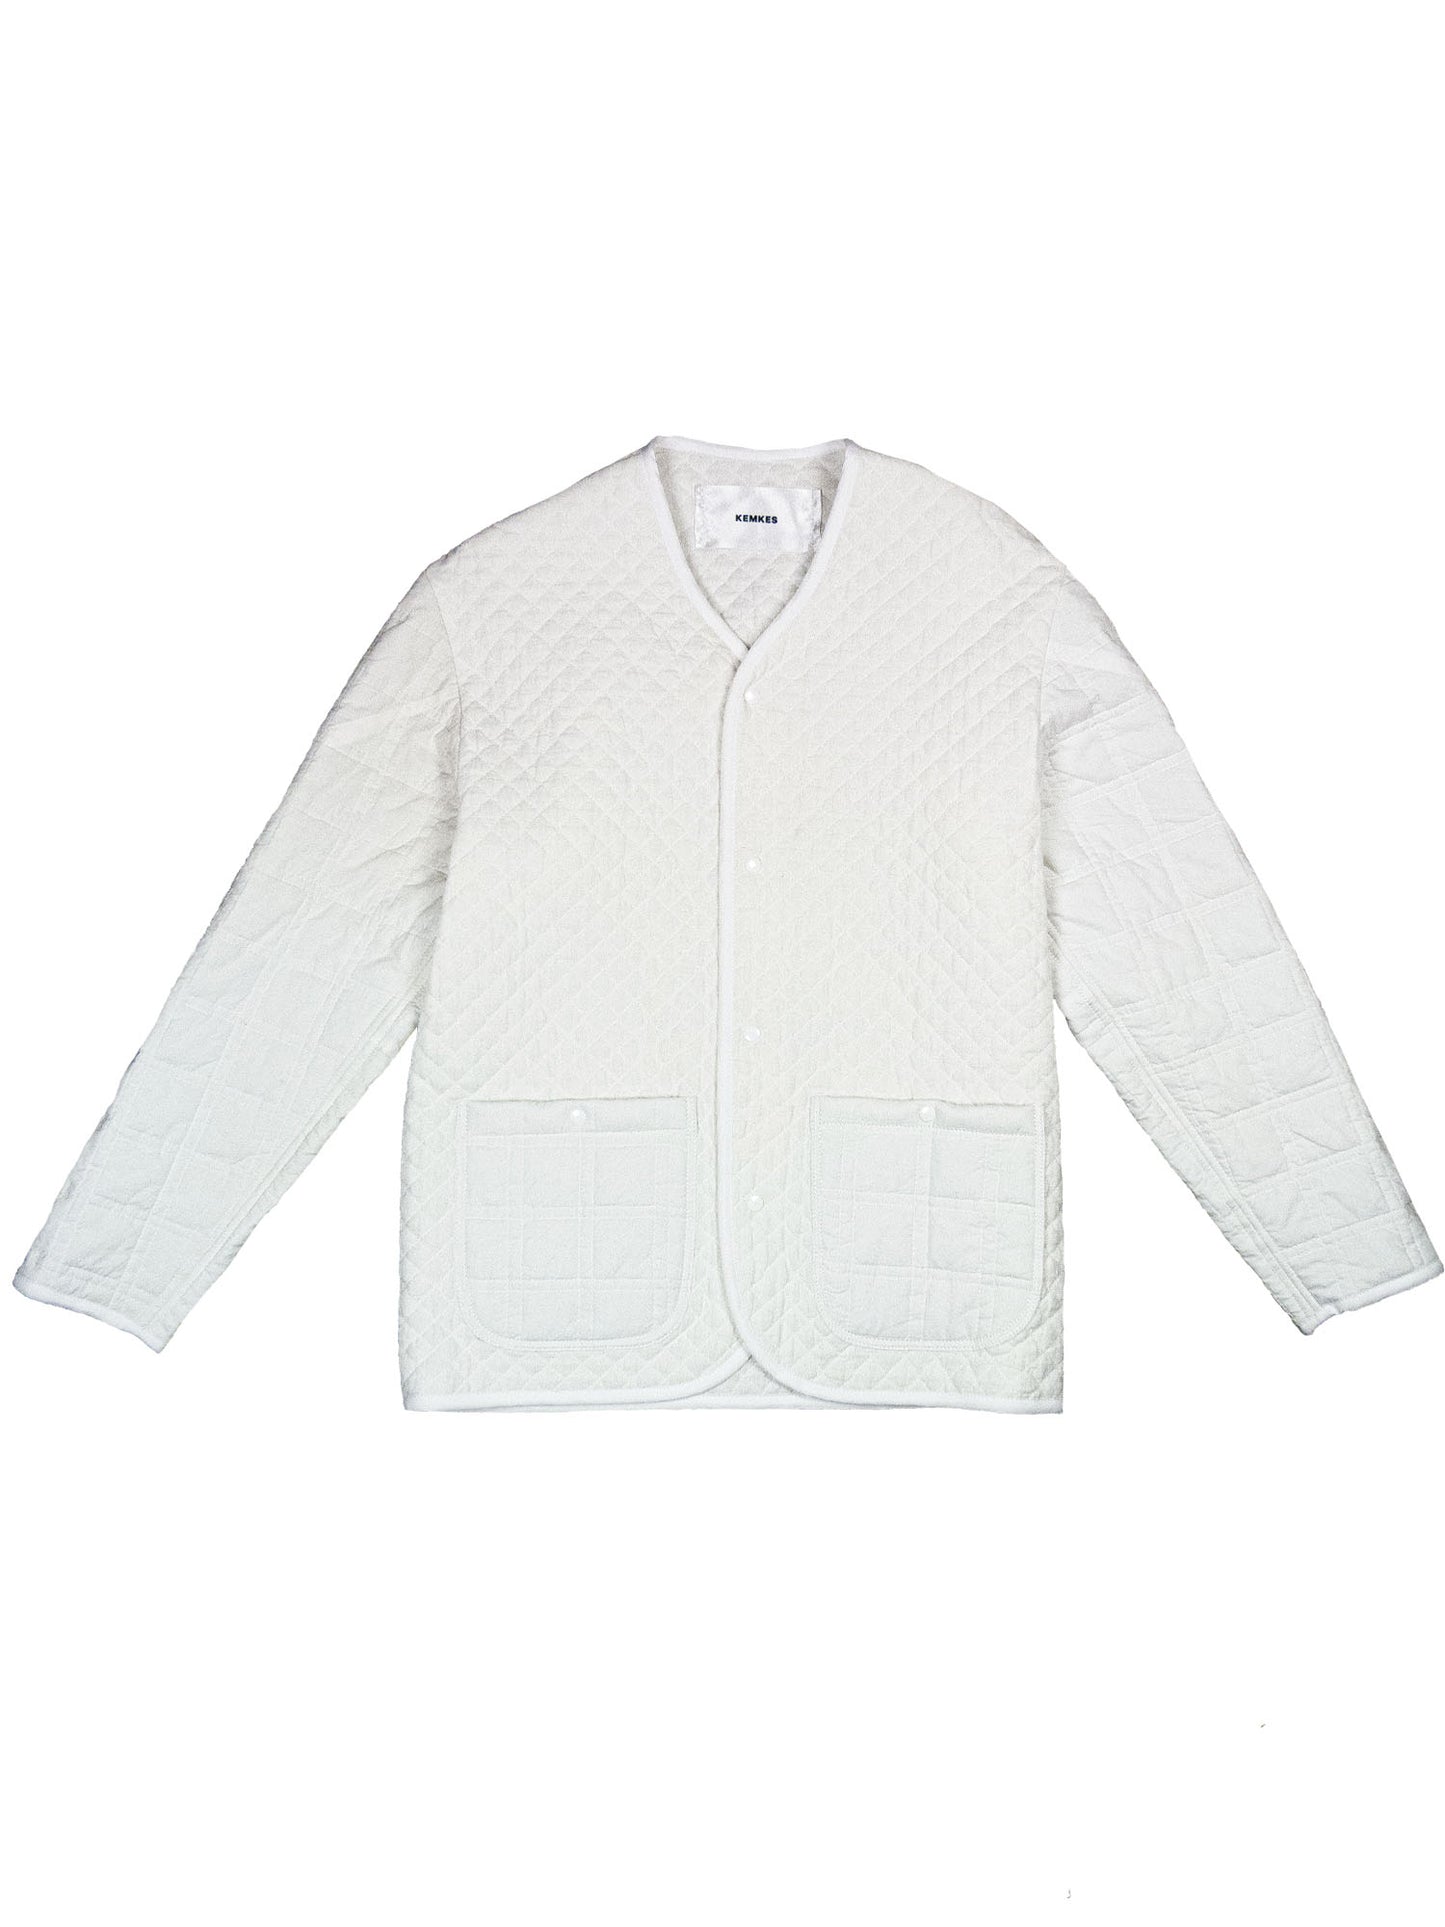 Jacket white quilt diamond S